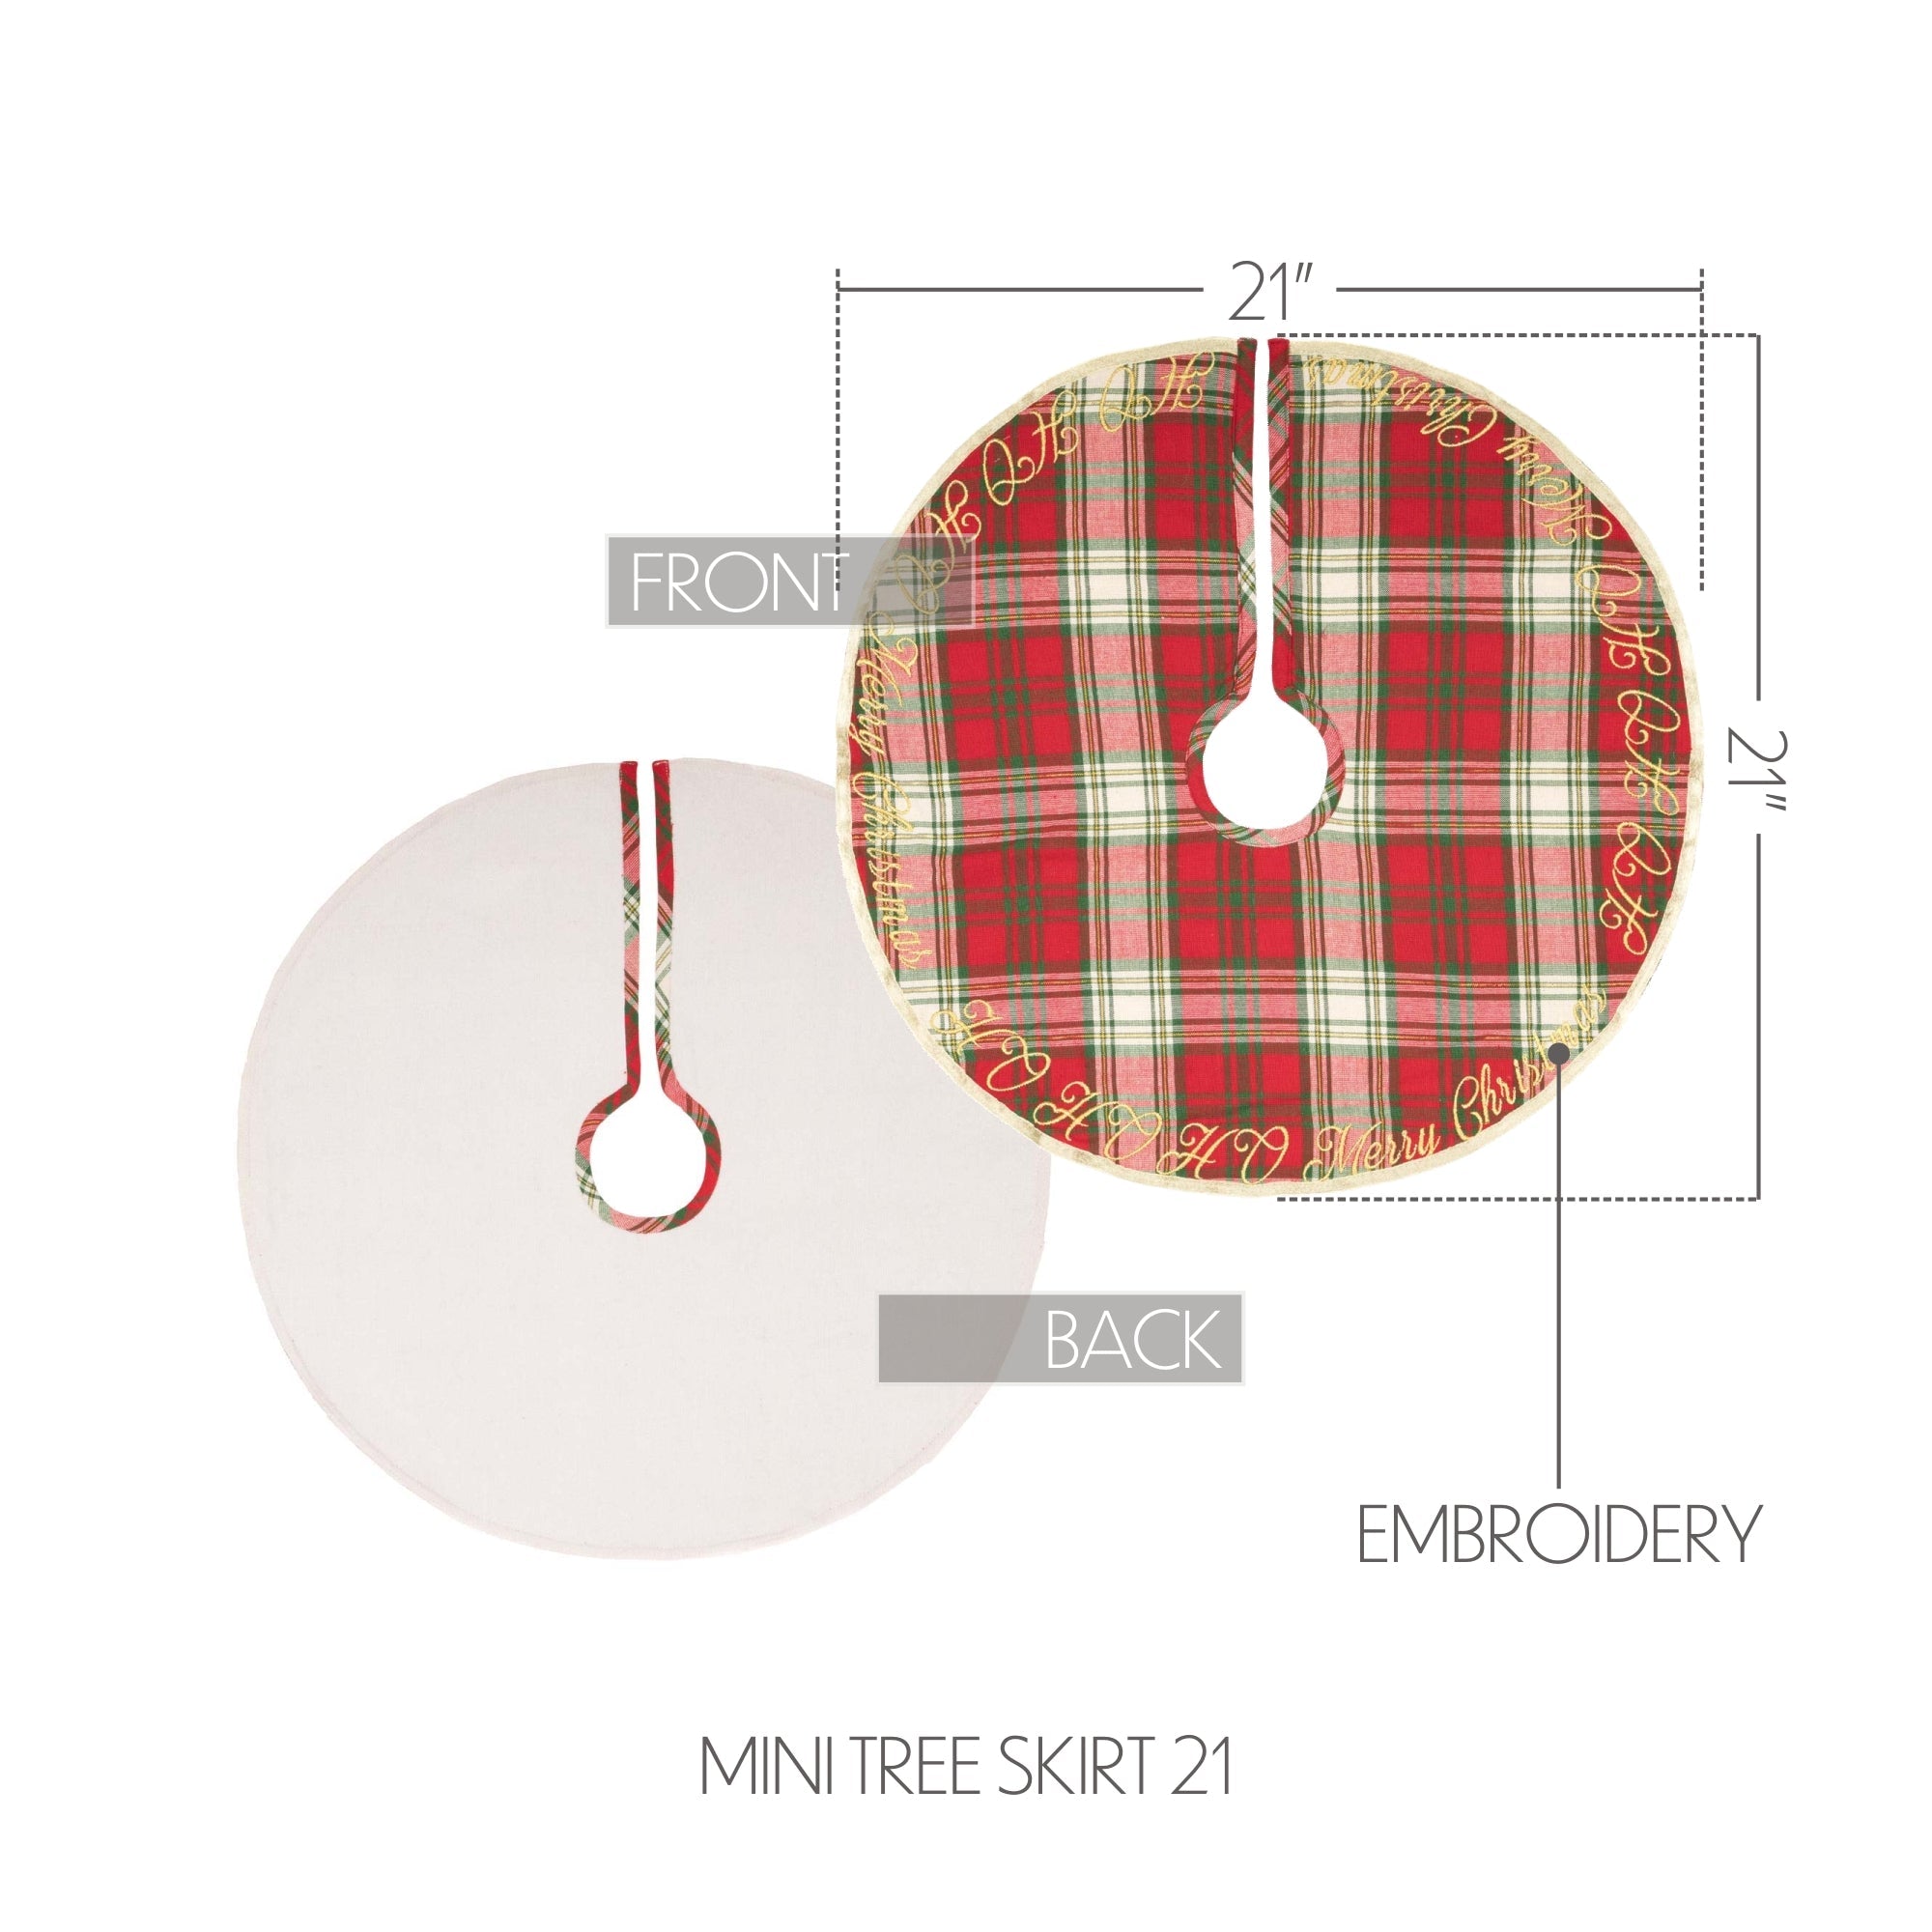 HO HO Holiday Mini Christmas Tree Skirt 21 VHC Brands